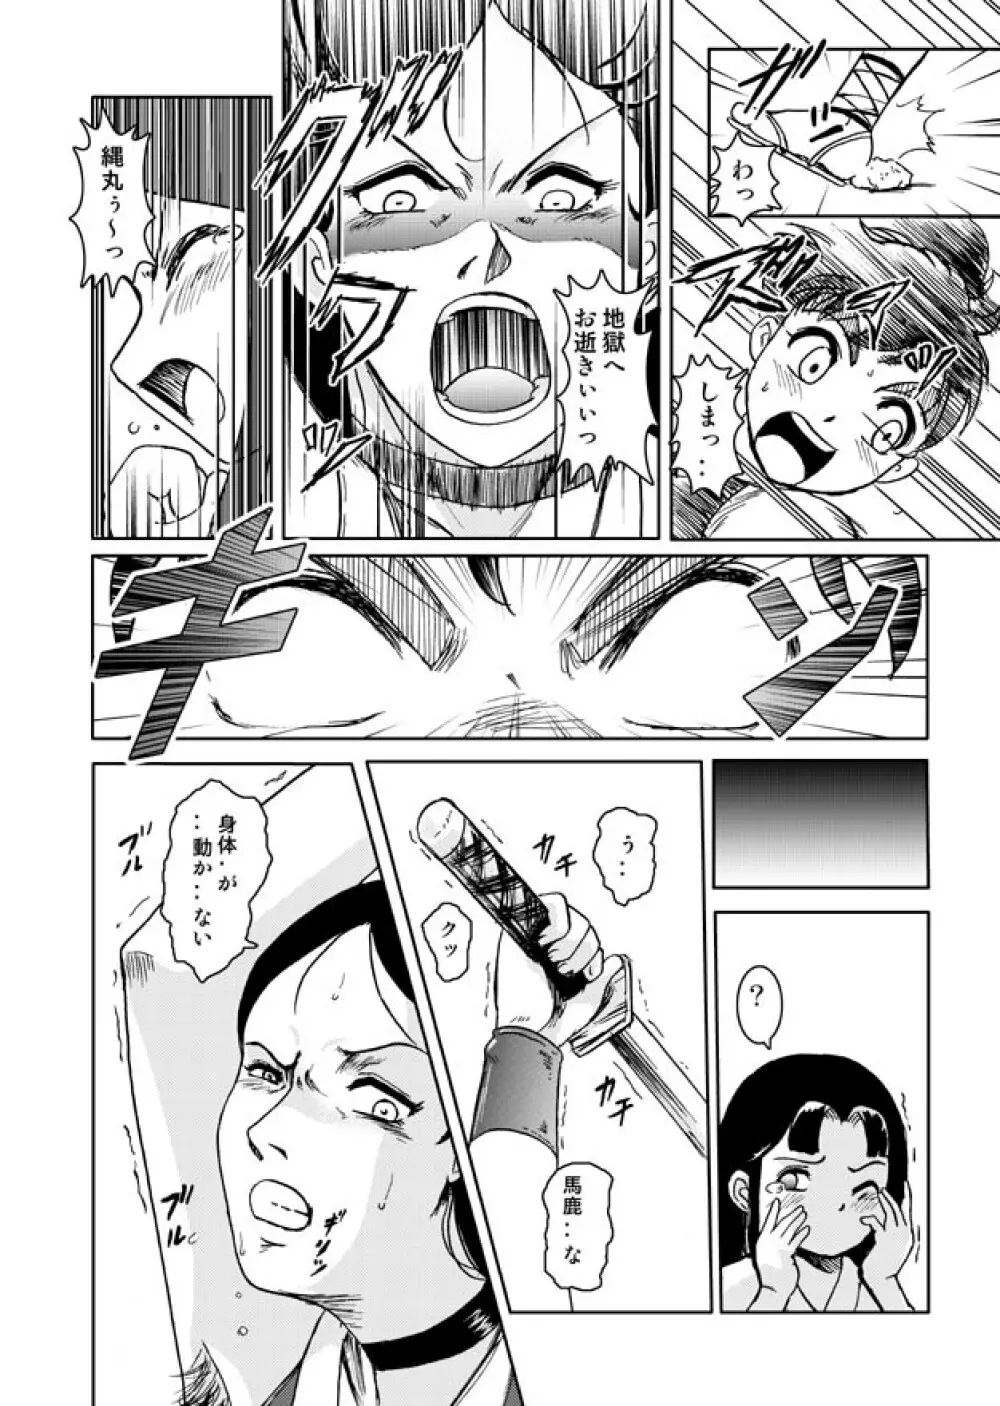 Same-themed manga about kid fighting female ninjas from japanese imageboard. 9ページ